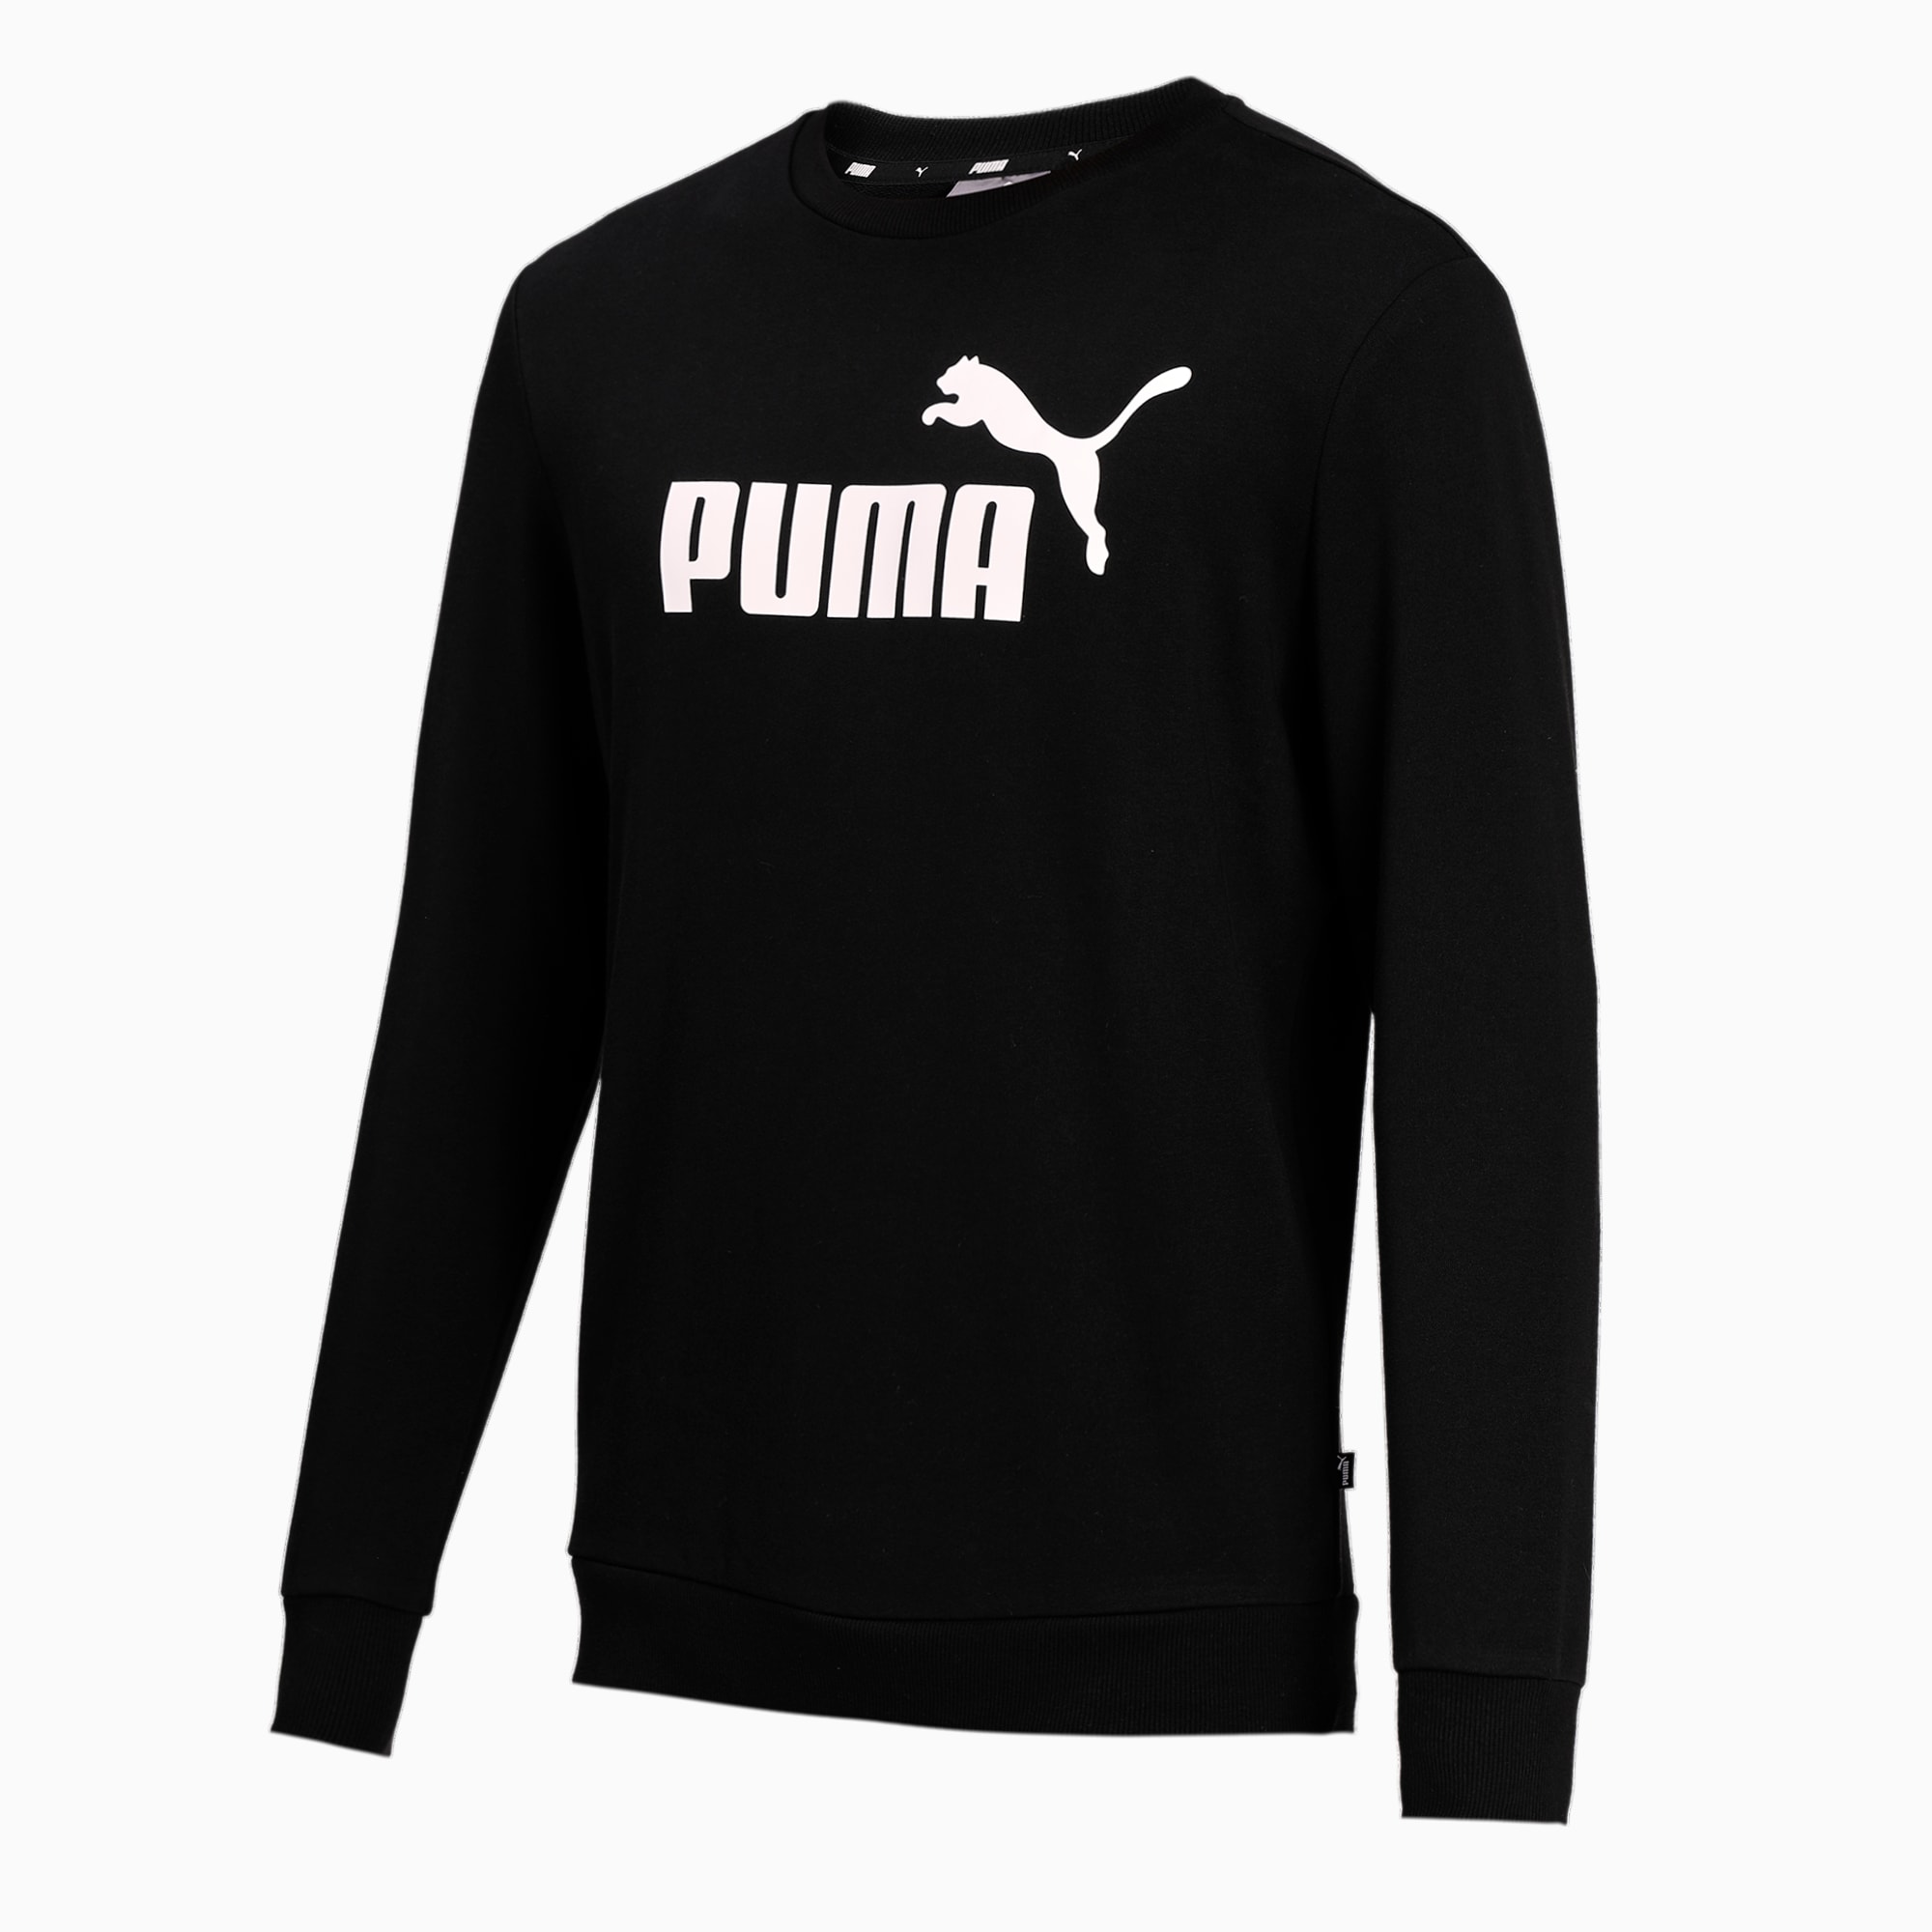 https://images.puma.com/image/upload/f_auto,q_auto,b_rgb:fafafa,w_2000,h_2000/global/586680/01/fnd/IND/fmt/png/Big-Logo-Men's-Sweatshirt